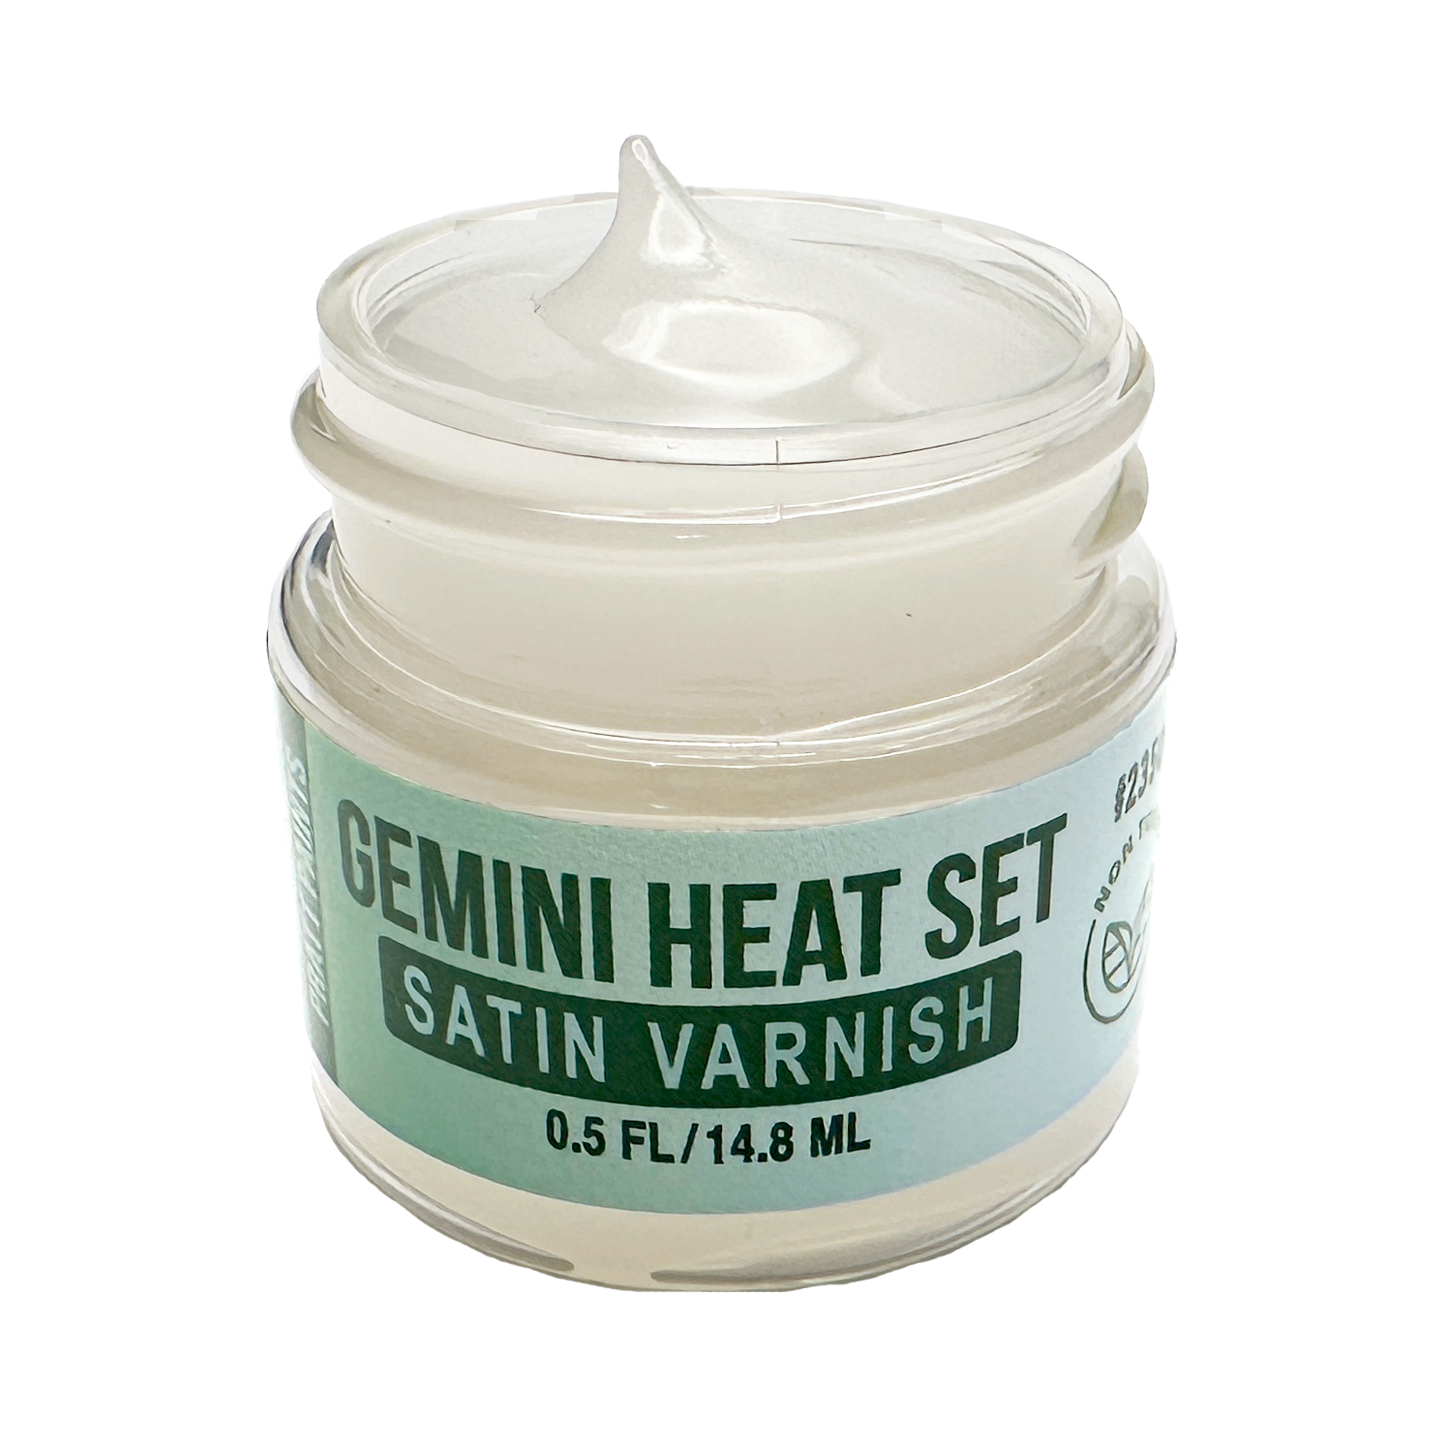 NEW! Satin Varnish - Gemini Heat Set Paint - 22 grams #2350